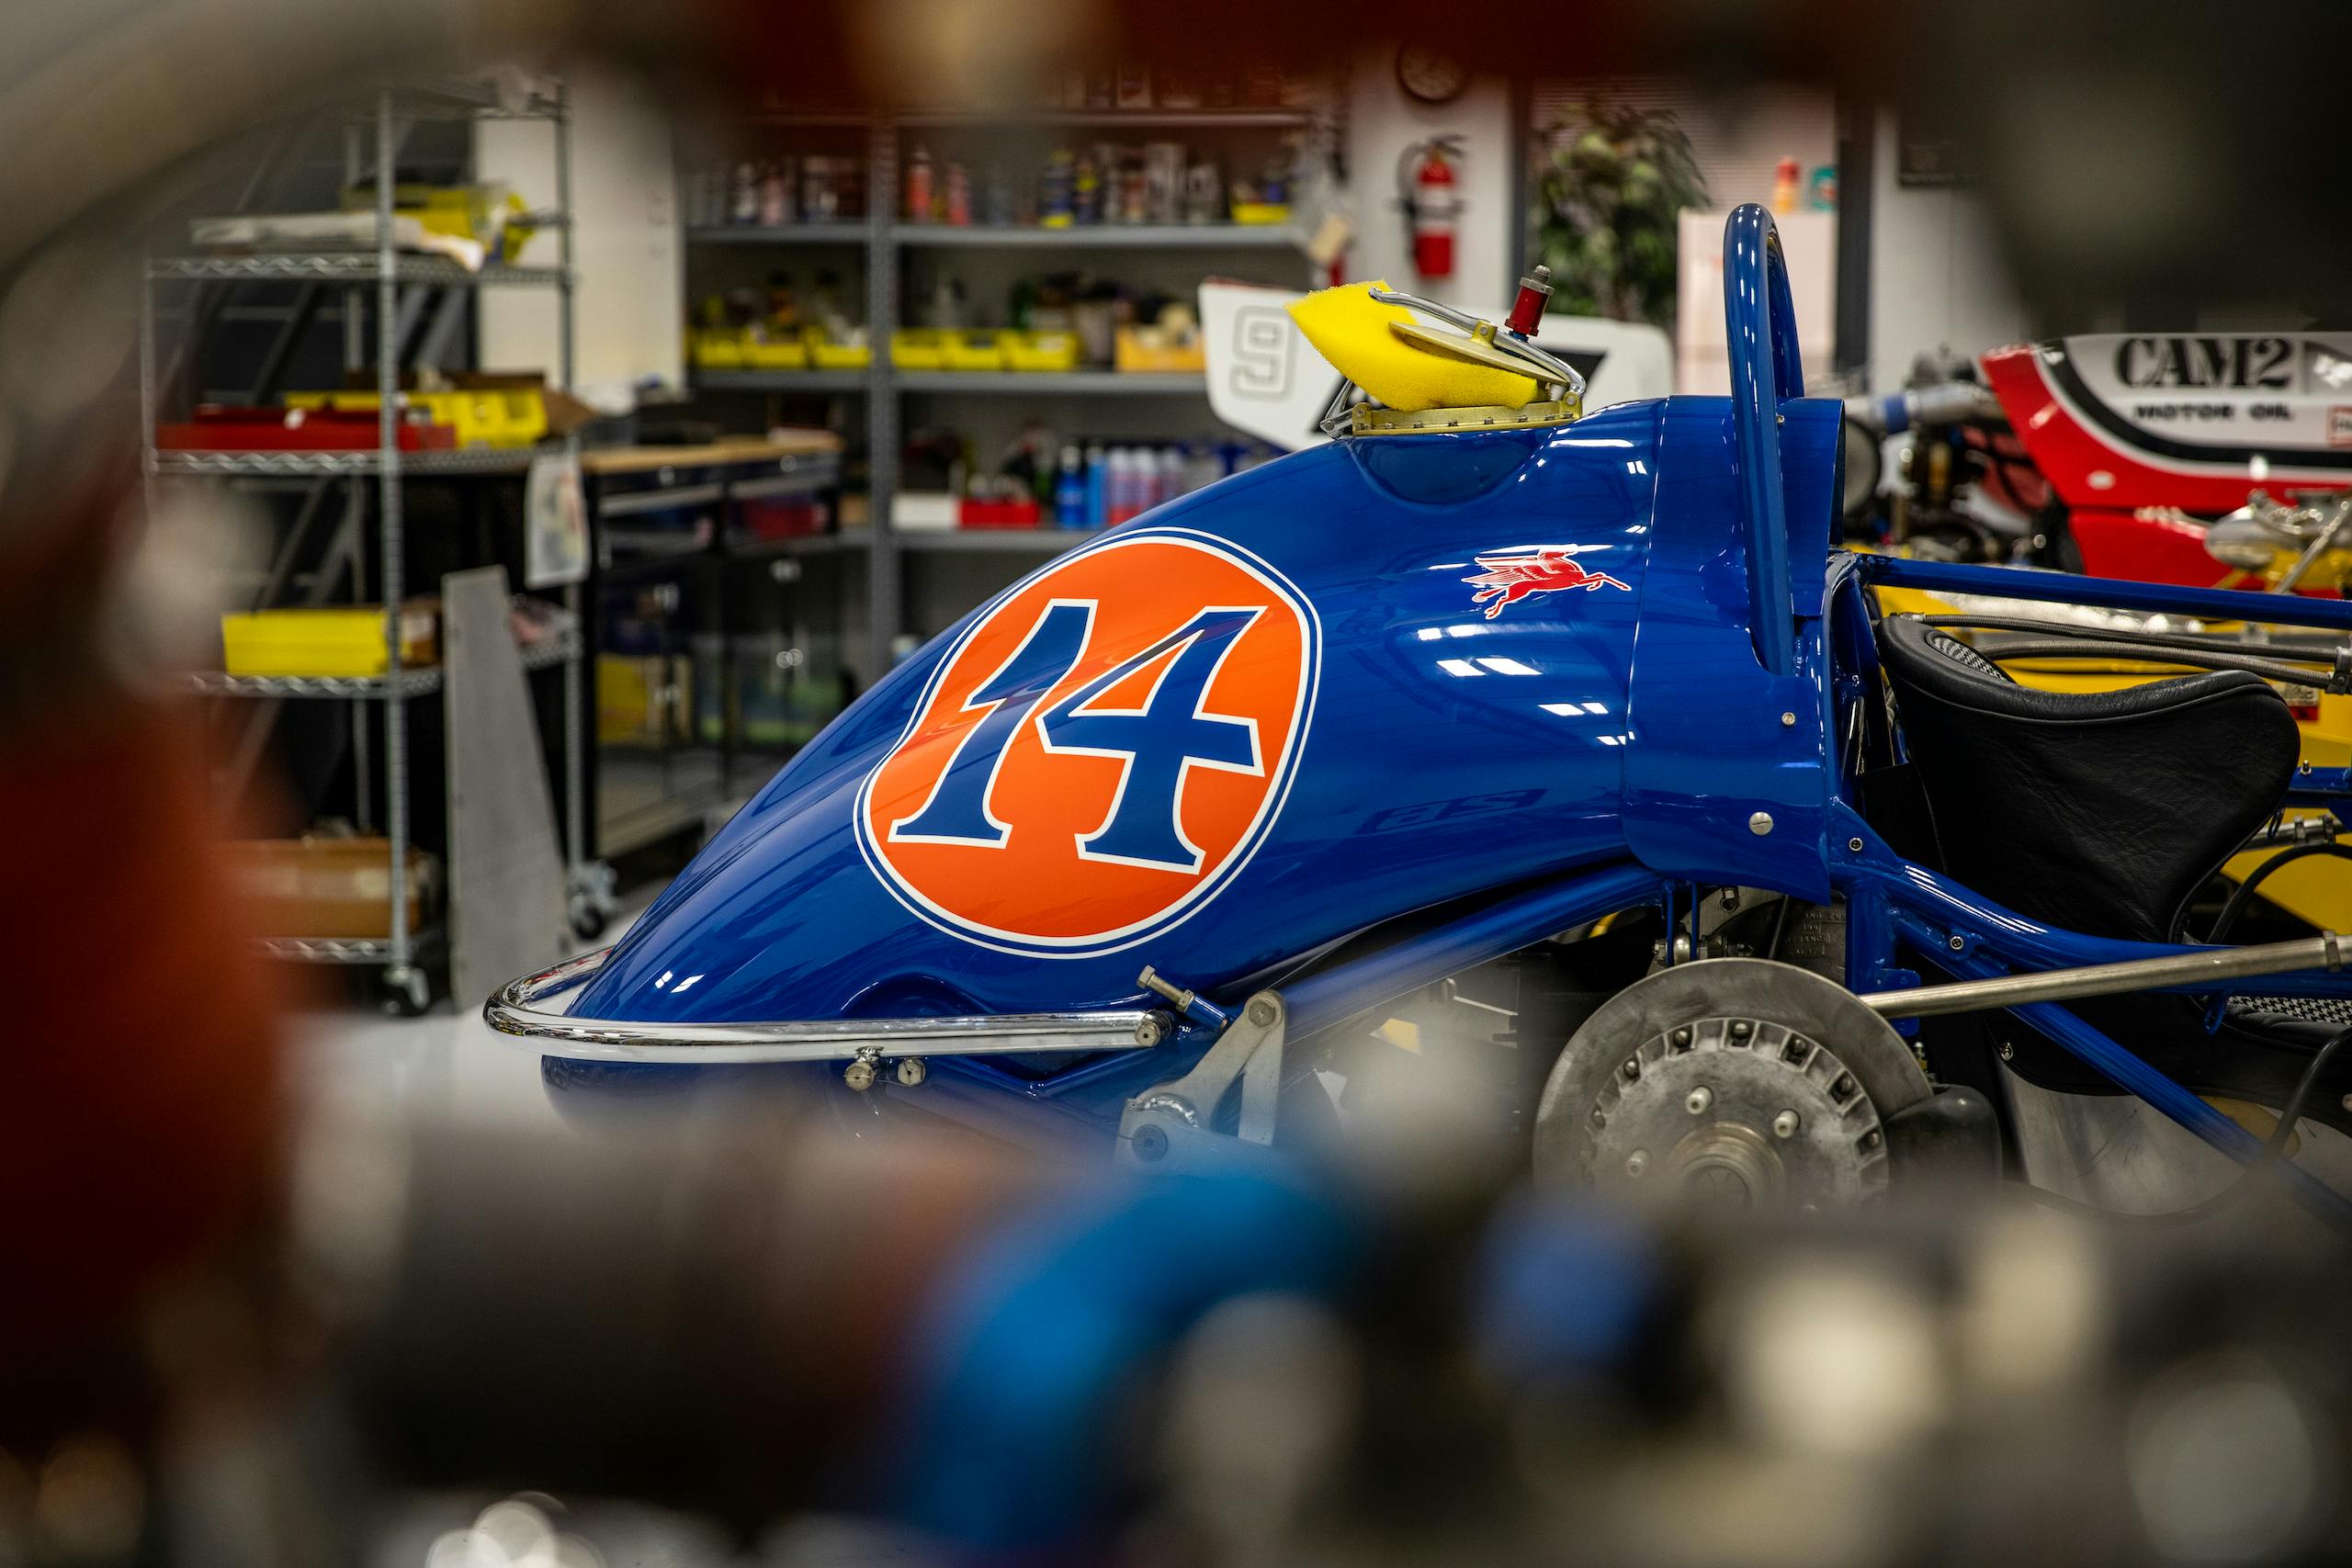 Turn 4 Restorations blue racer